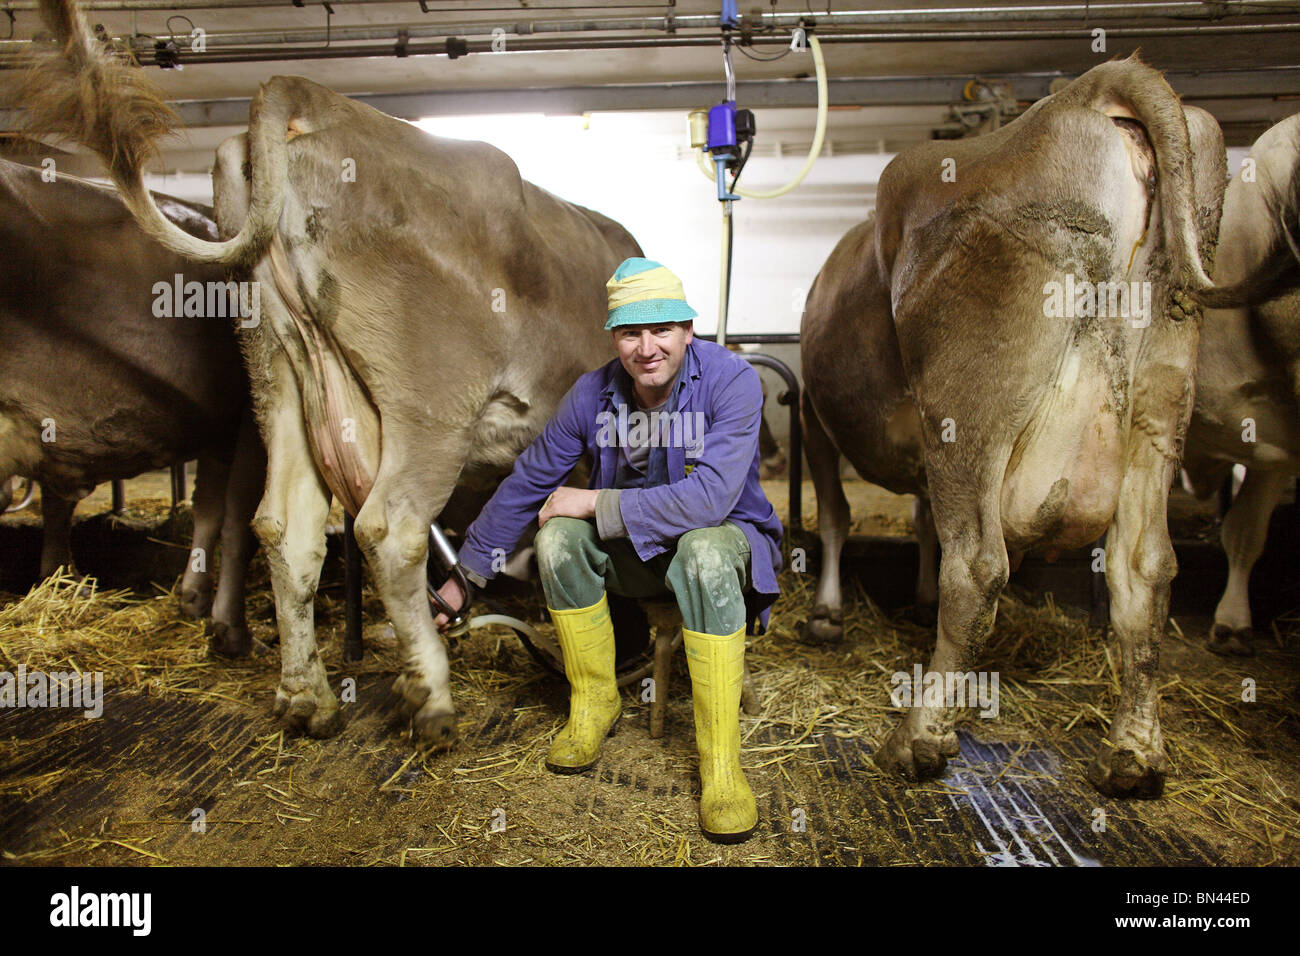 Farmer puts a milking machine on a cow's udder, Jerzens, Austria Stock Photo